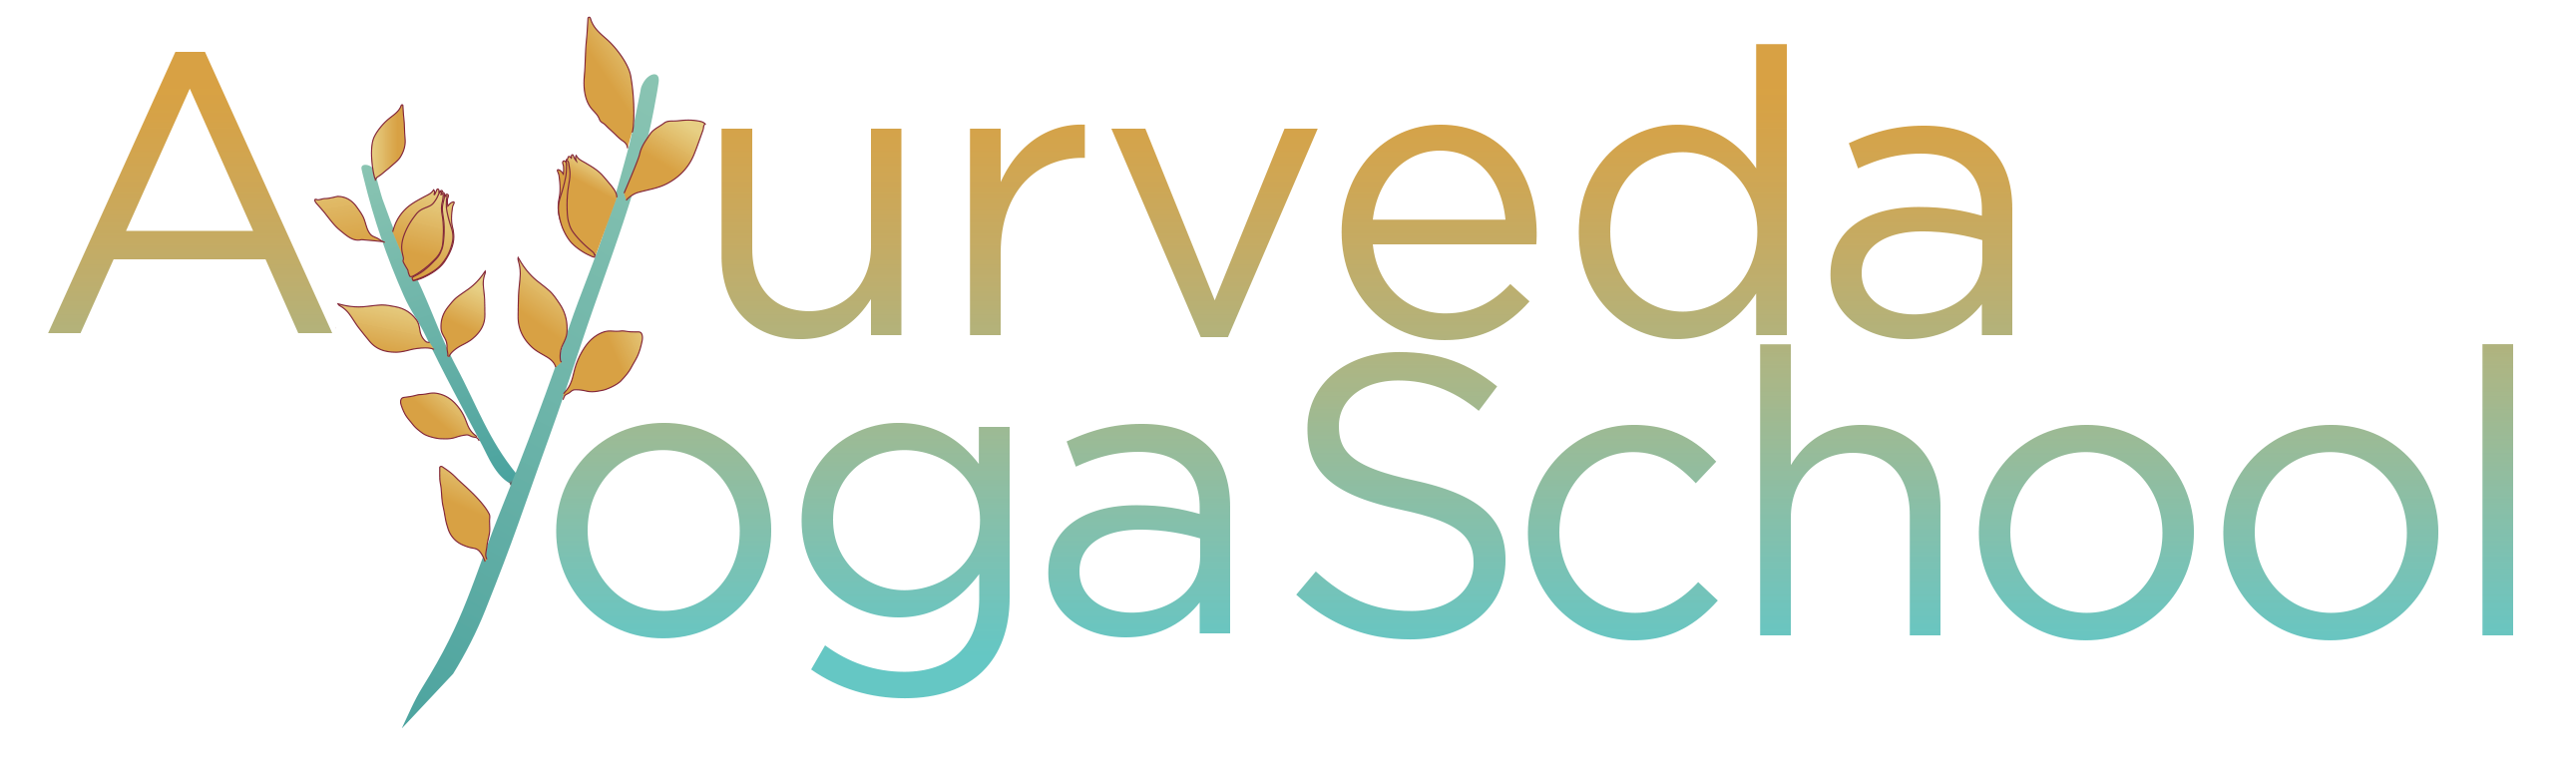 Ayurveda Yoga School - New Mexico, New York, Costa Rica